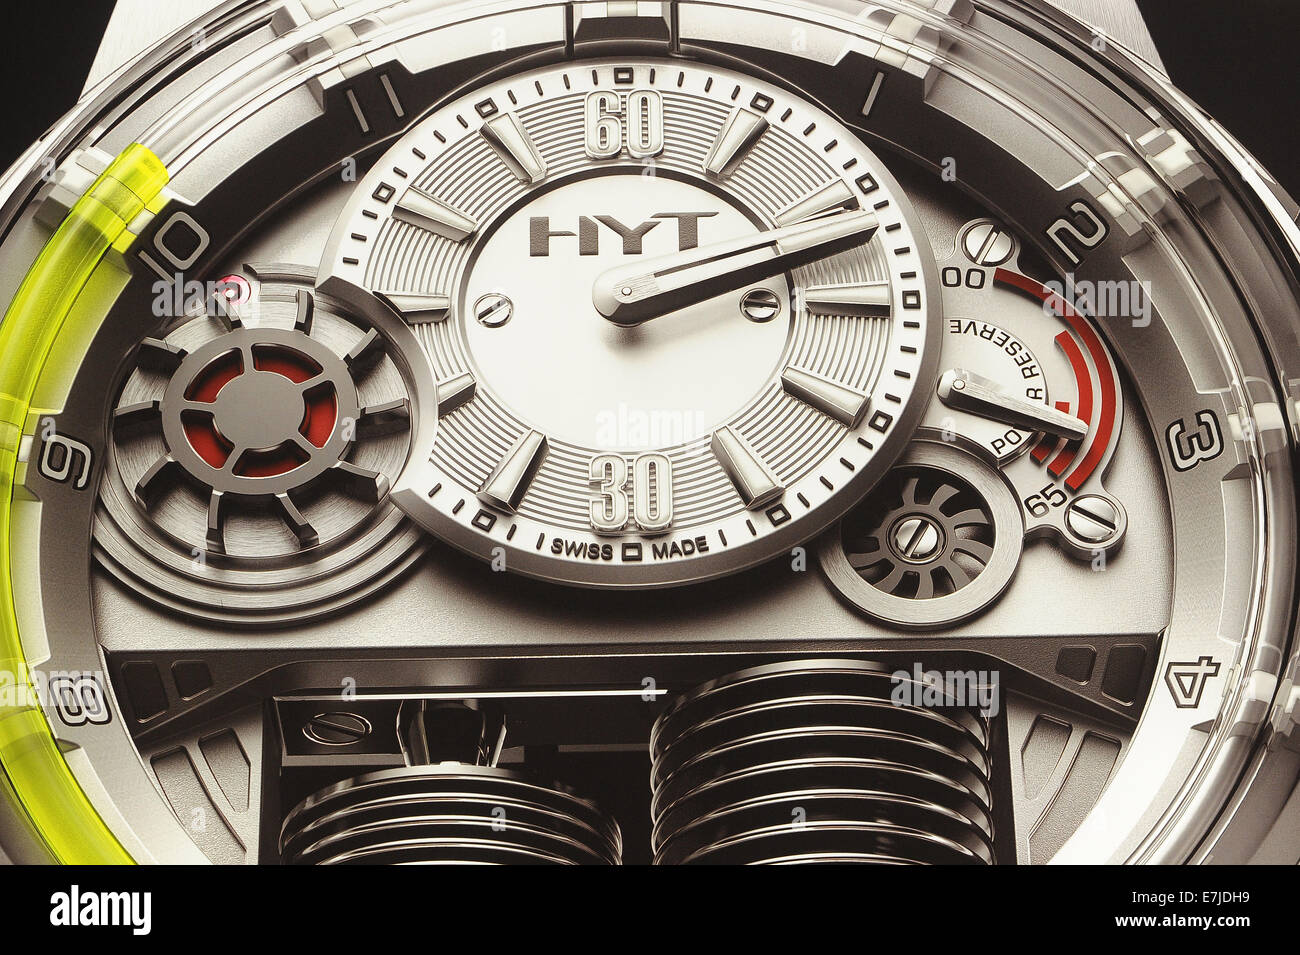 Clocks, Watches, clock, watch, luxury, Swiss, mechanics, luxury clocks, Hyt, Hydro mechanics, water clock, wristwatch, technolog Stock Photo